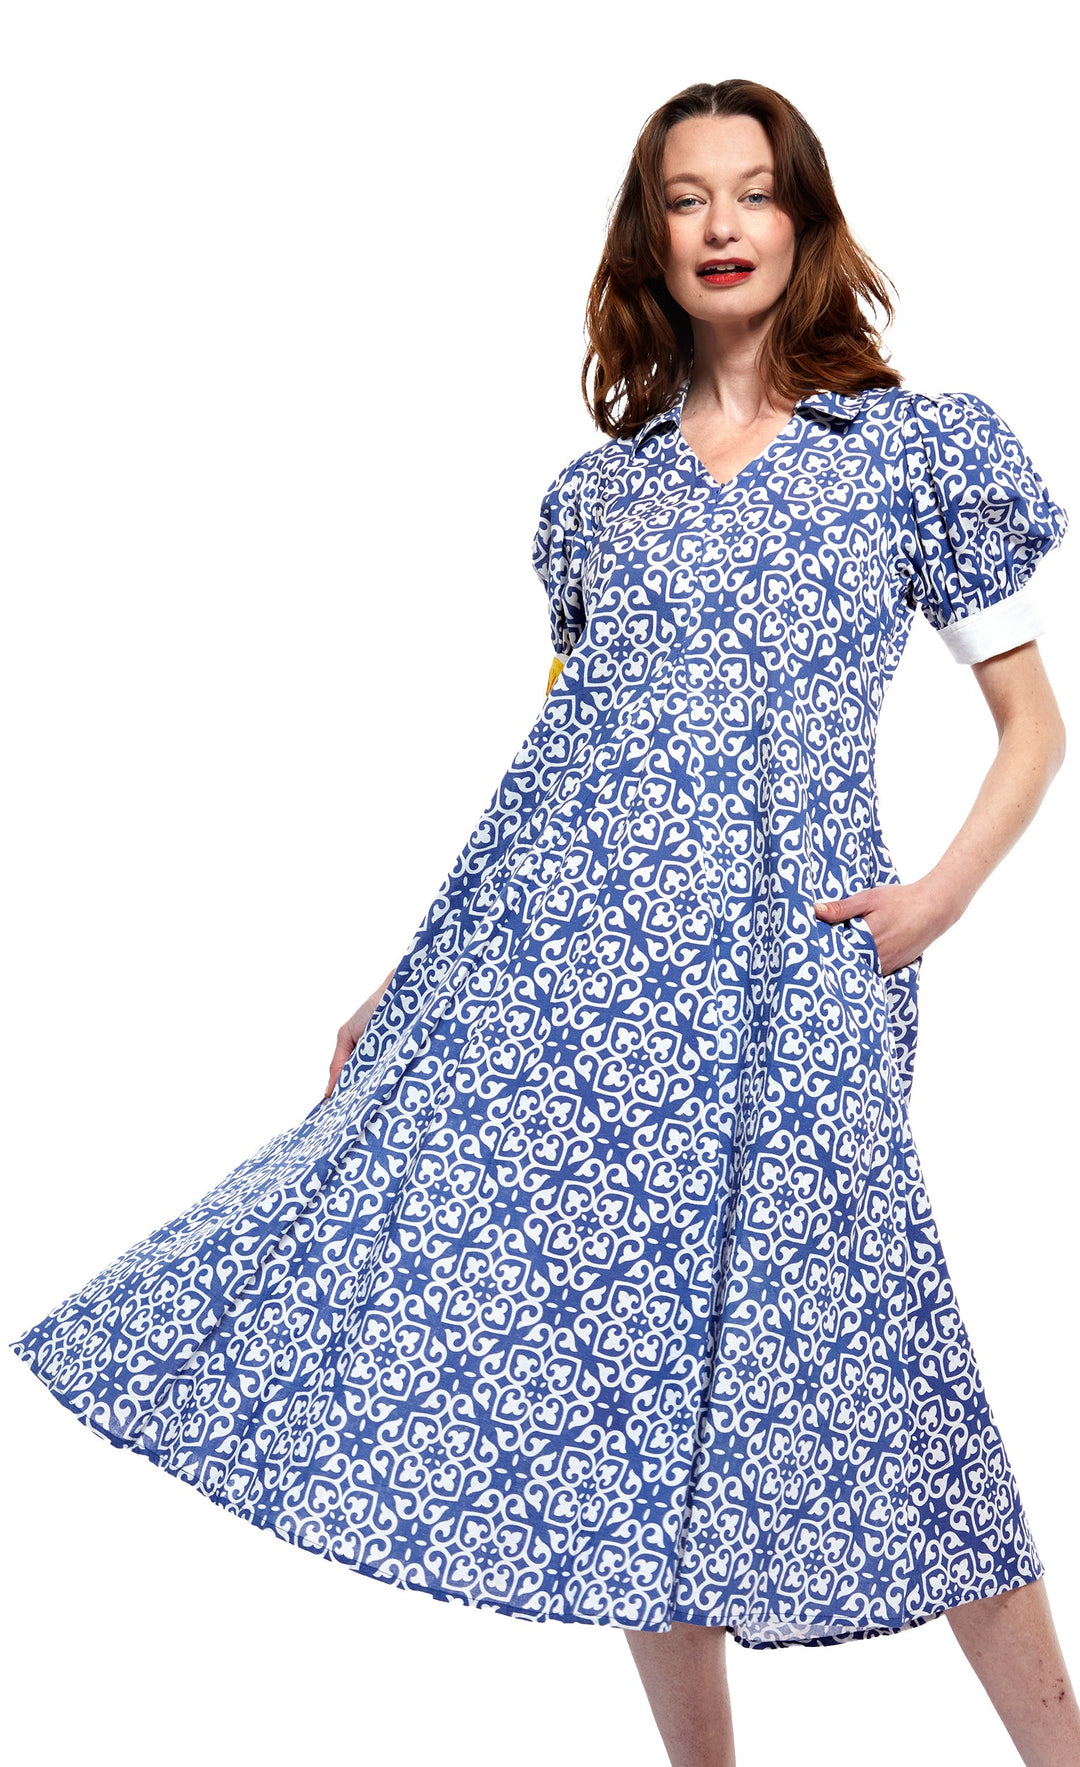 Montauk Dress in Blue with White Geometric Pattern XS / 6657-M600